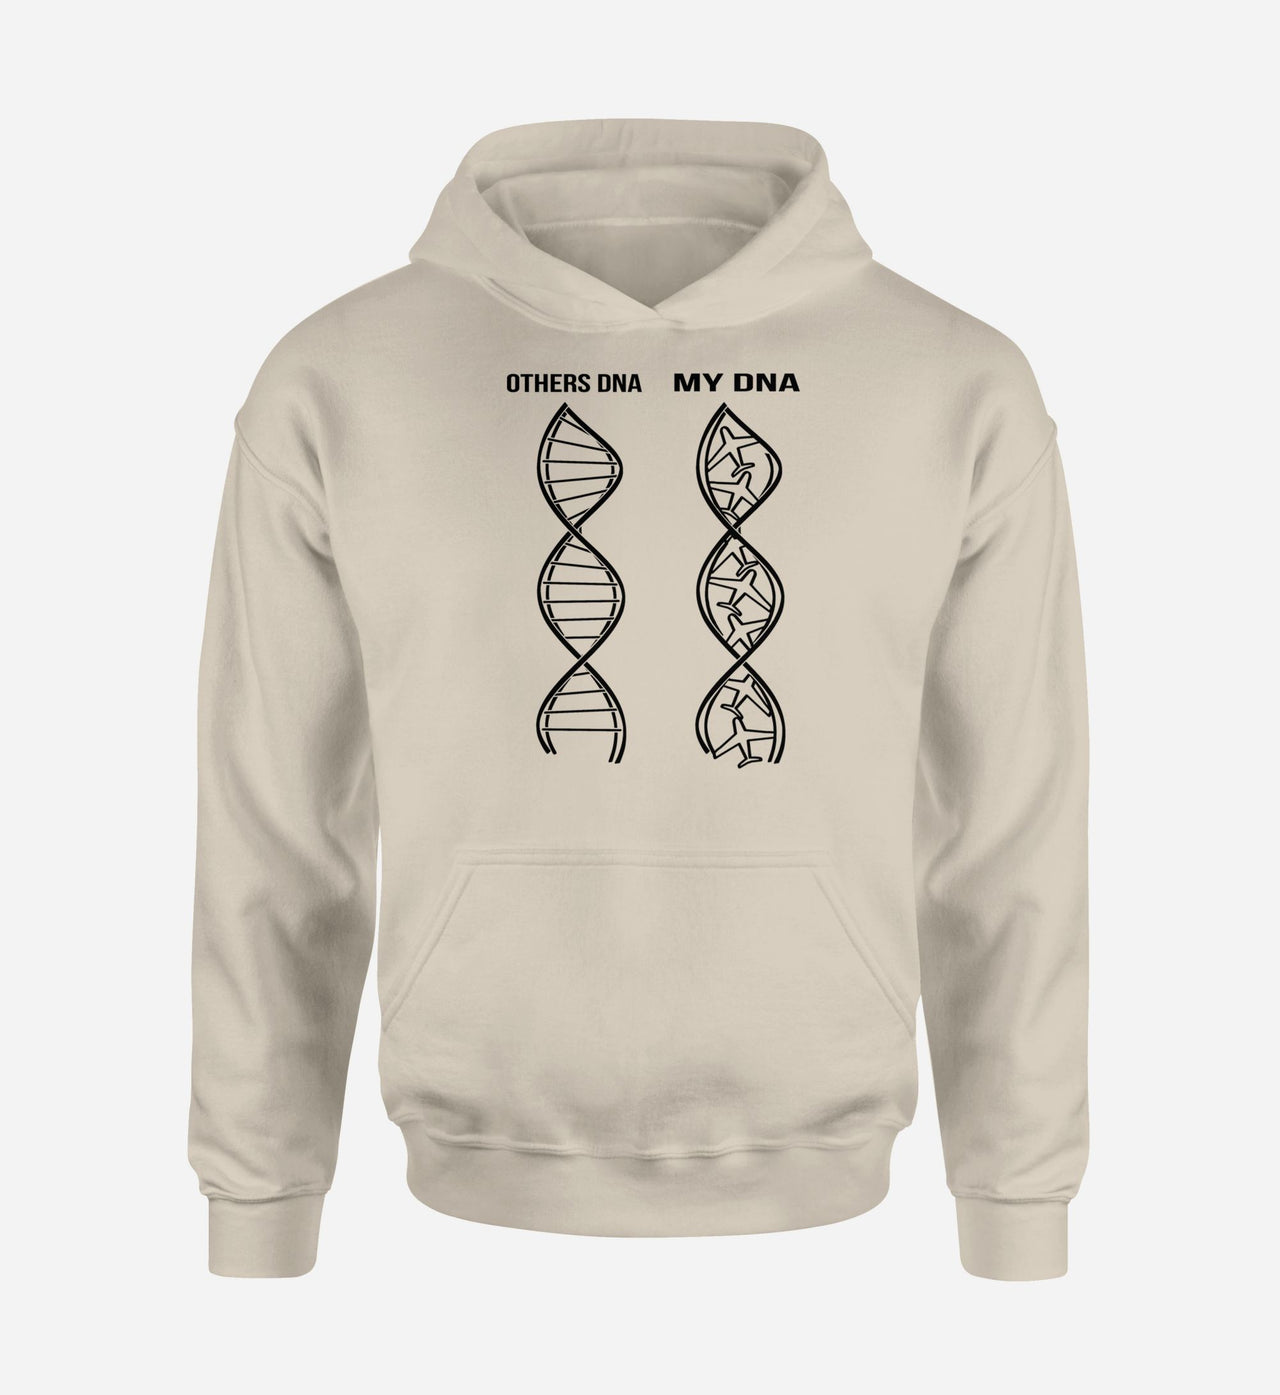 Aviation DNA Designed Hoodies